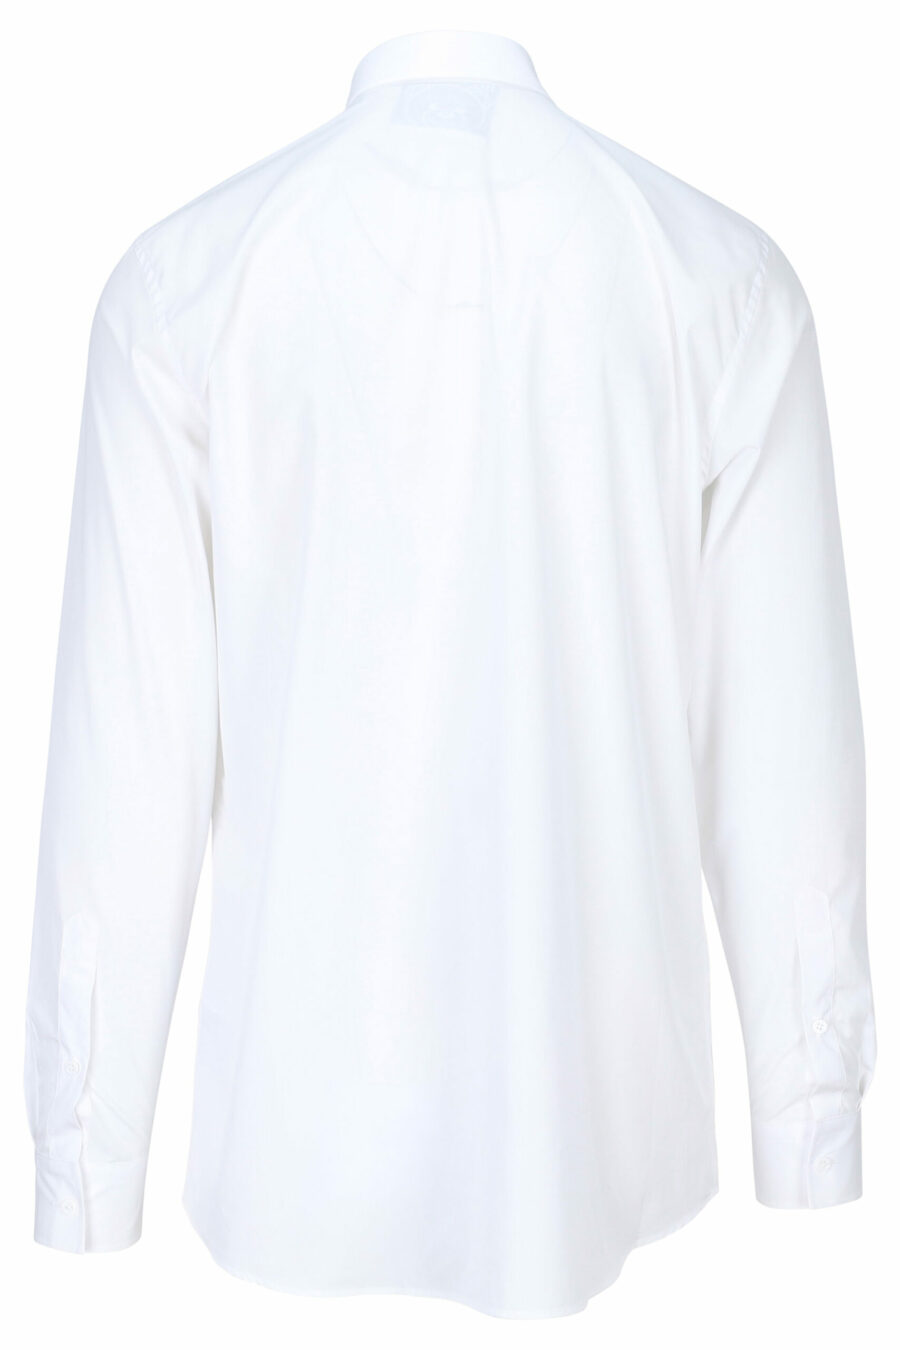 Camisa blanca con minilogo "teddy" bordado - 889316631326 1 scaled